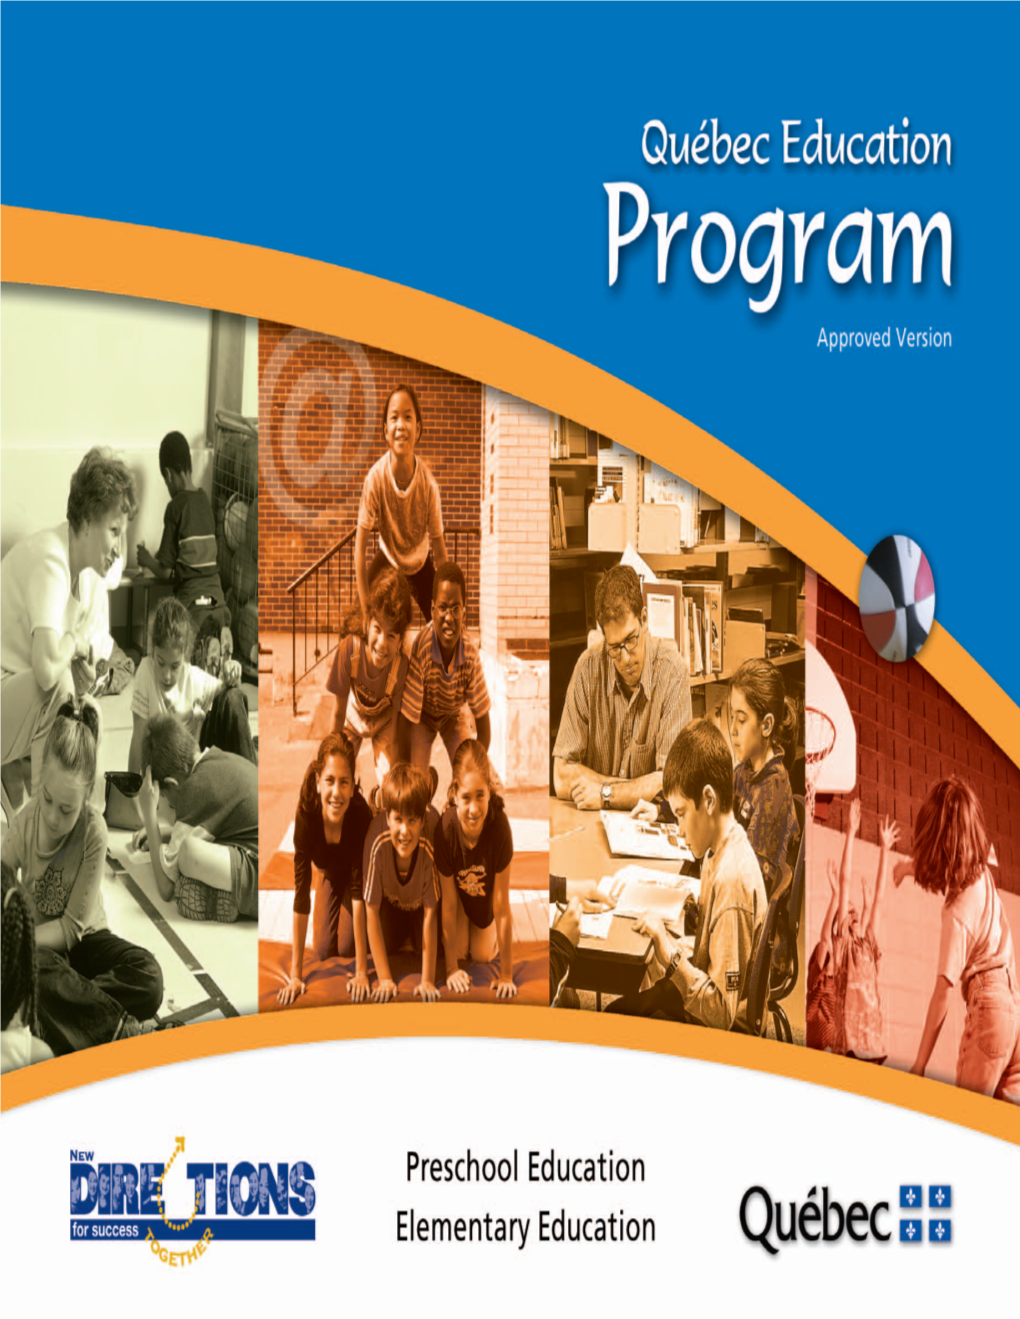 Québec Education Program Approved Version